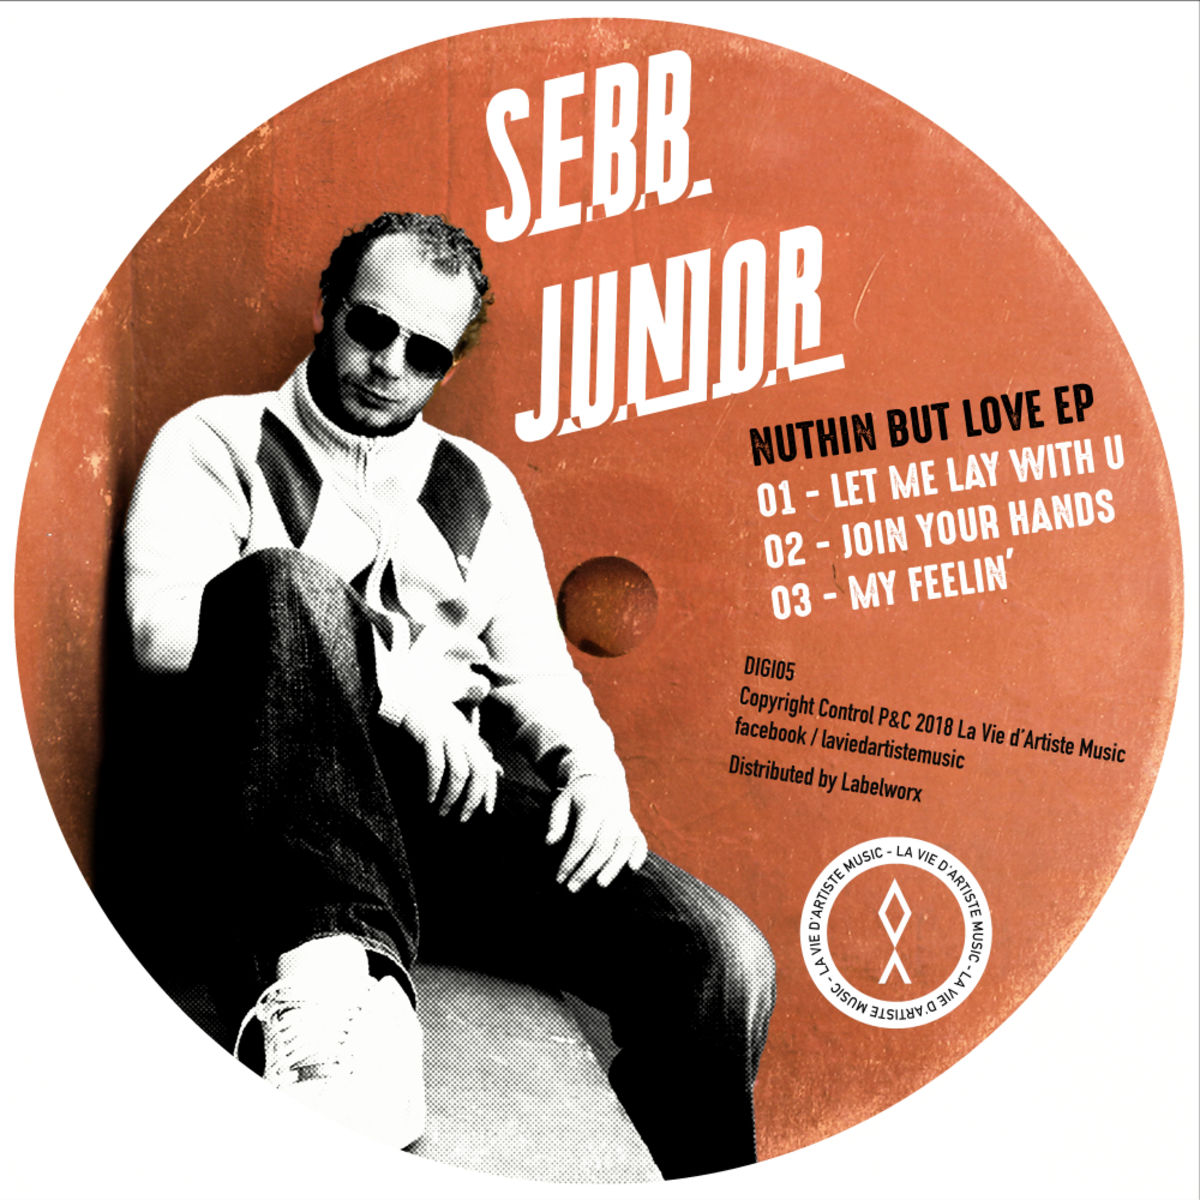 Sebb Junior - Nuthin But Love / La Vie D'artiste Music